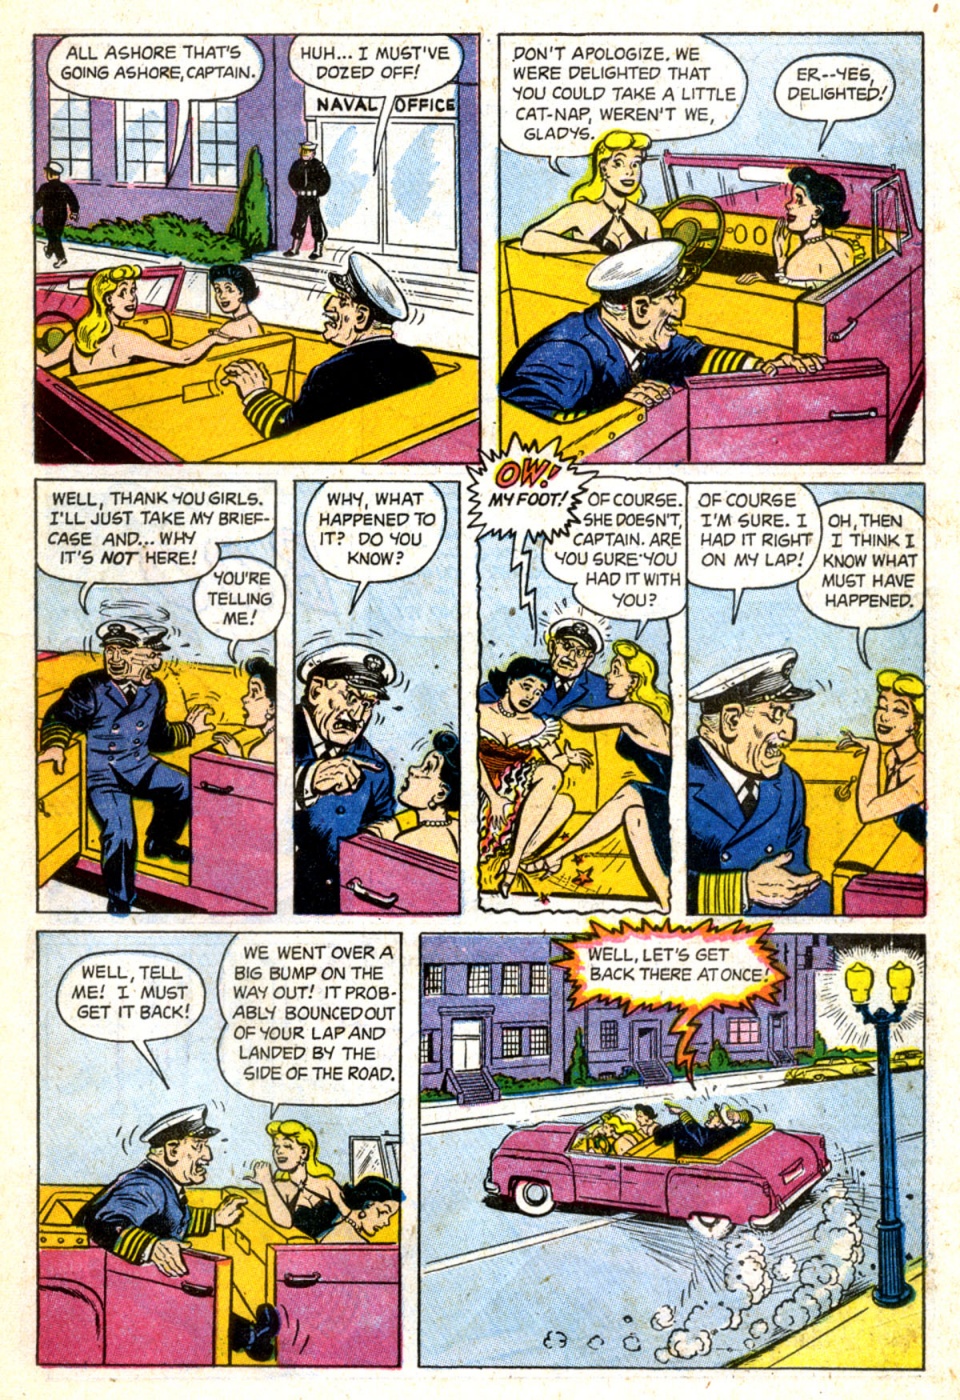 Anchors the Salt Water Daffy - Comics (c) (11)